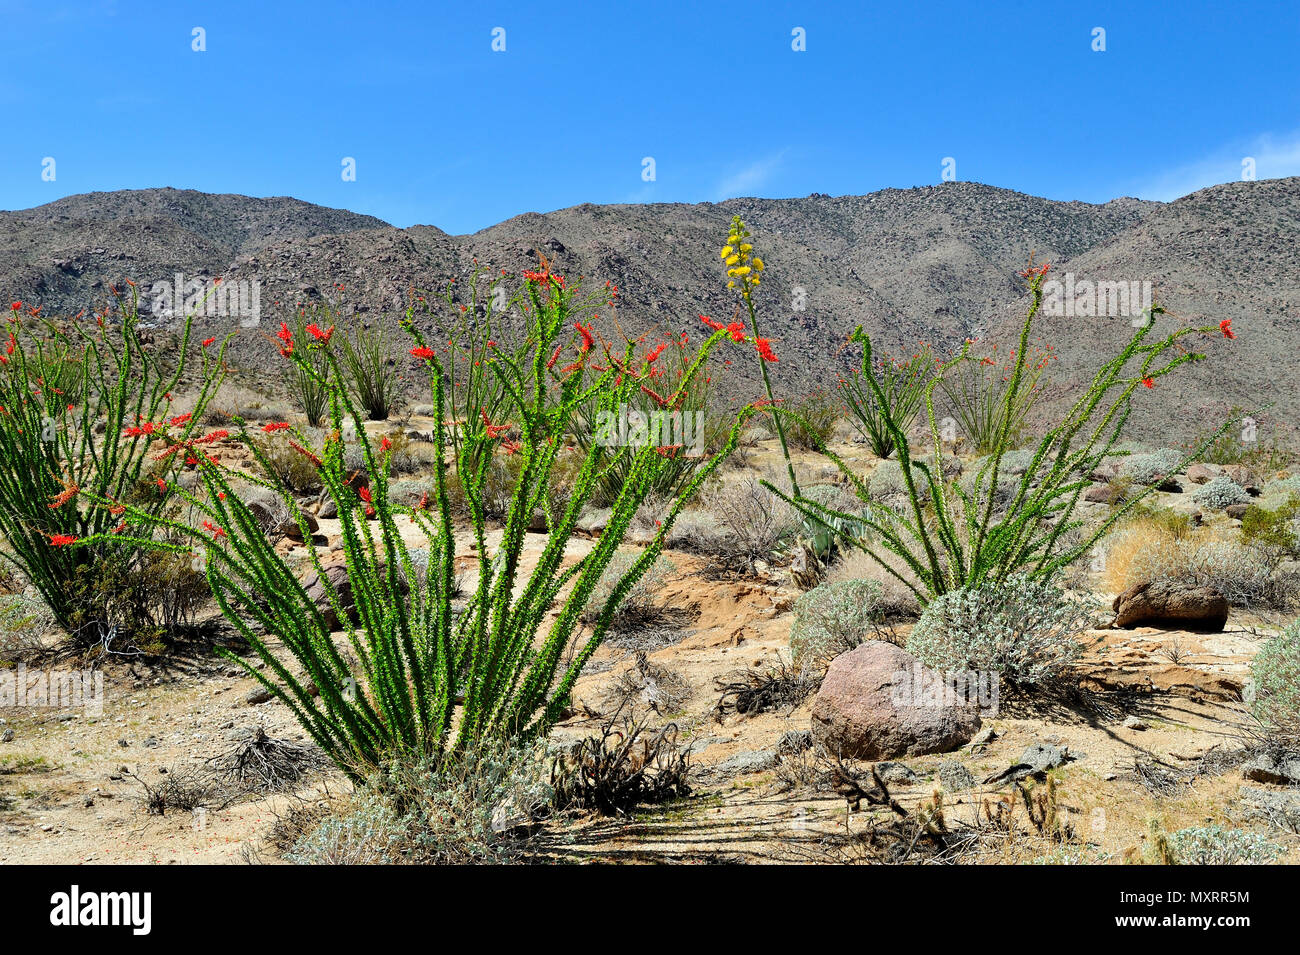 Blooming Ocotillo and Century Plant, Glorietta Canyon, Anza-Borrego Desert State Park, CA, USA 120328 30213 Stock Photo